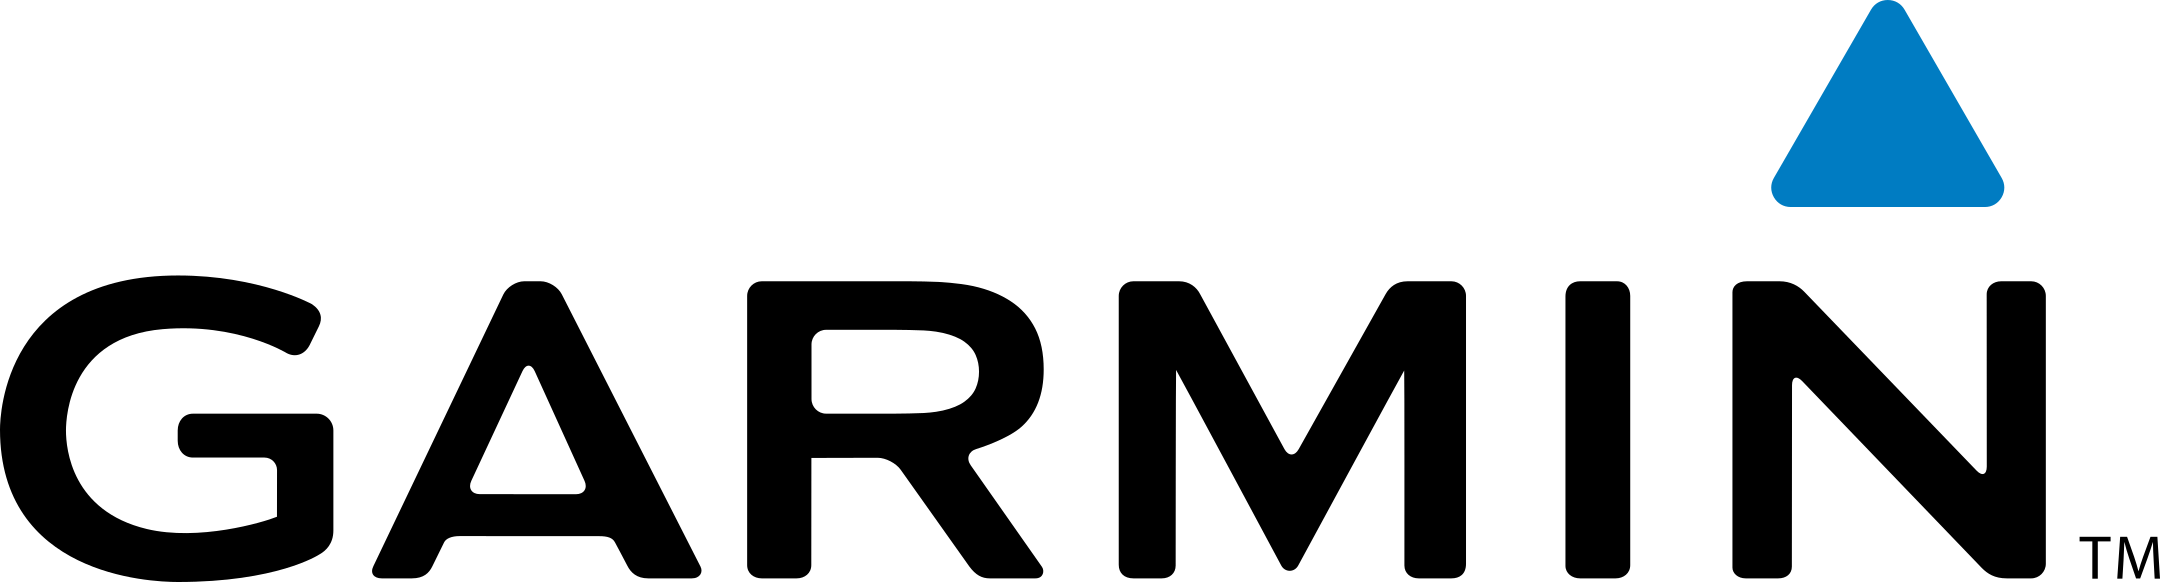 garmin logo 1 1 - Garmin Logo